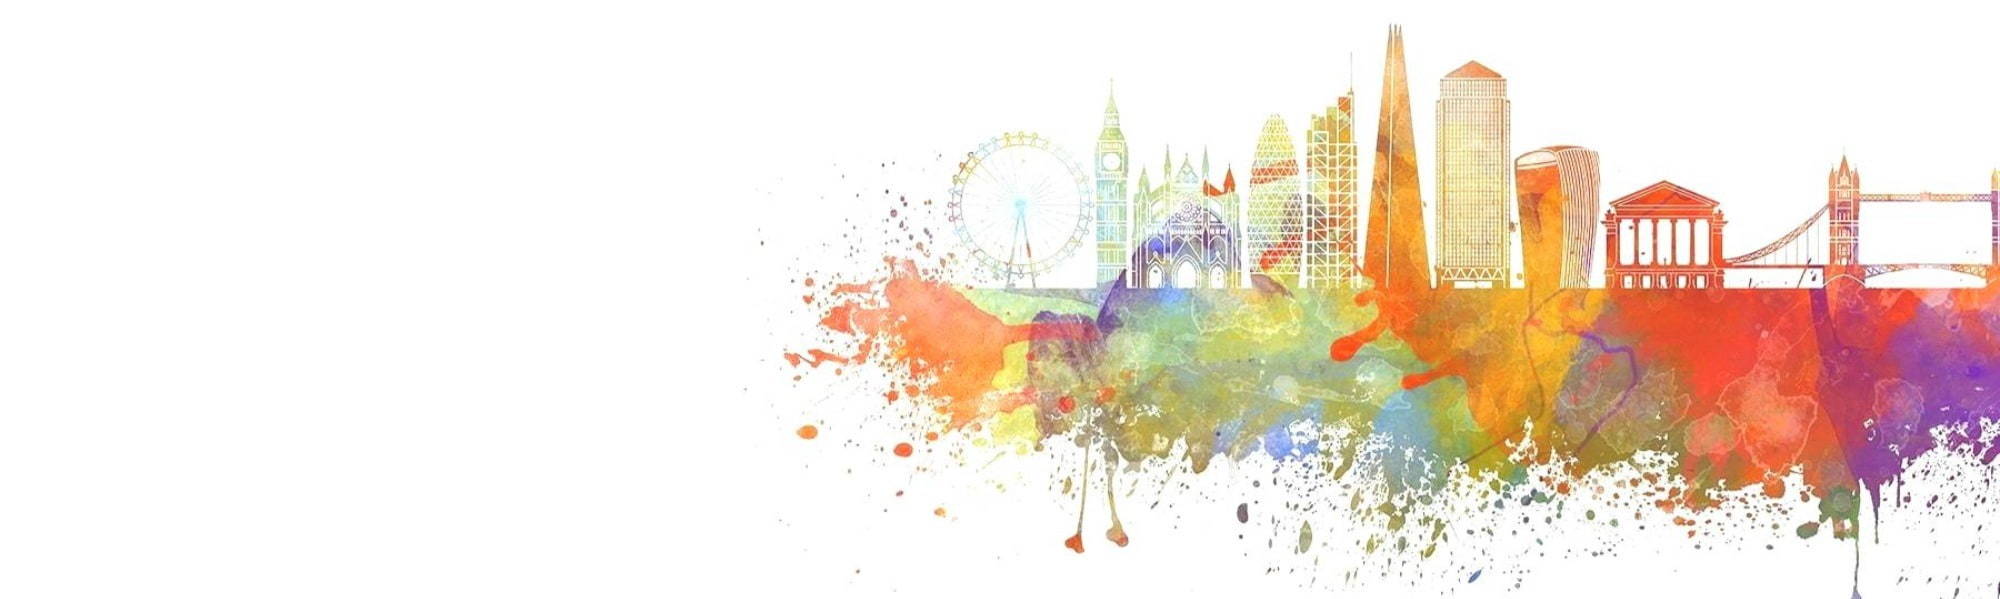 Watercolour Image of London Landmarks